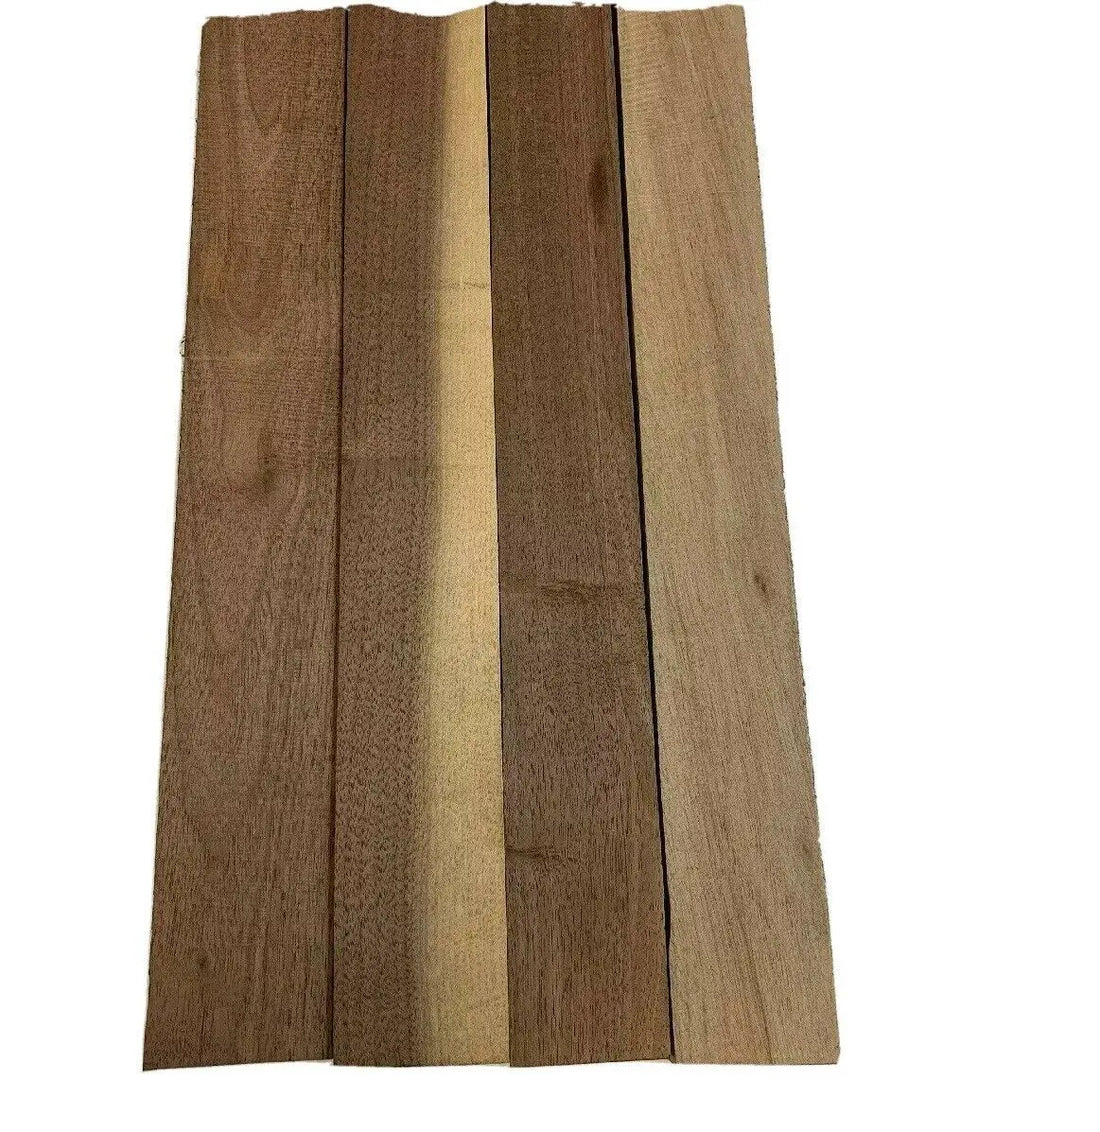 Pack of 4, Black Walnut Lumber Board, Turning Wood of Size: 2”x 2”x 12” - Exotic Wood Zone 